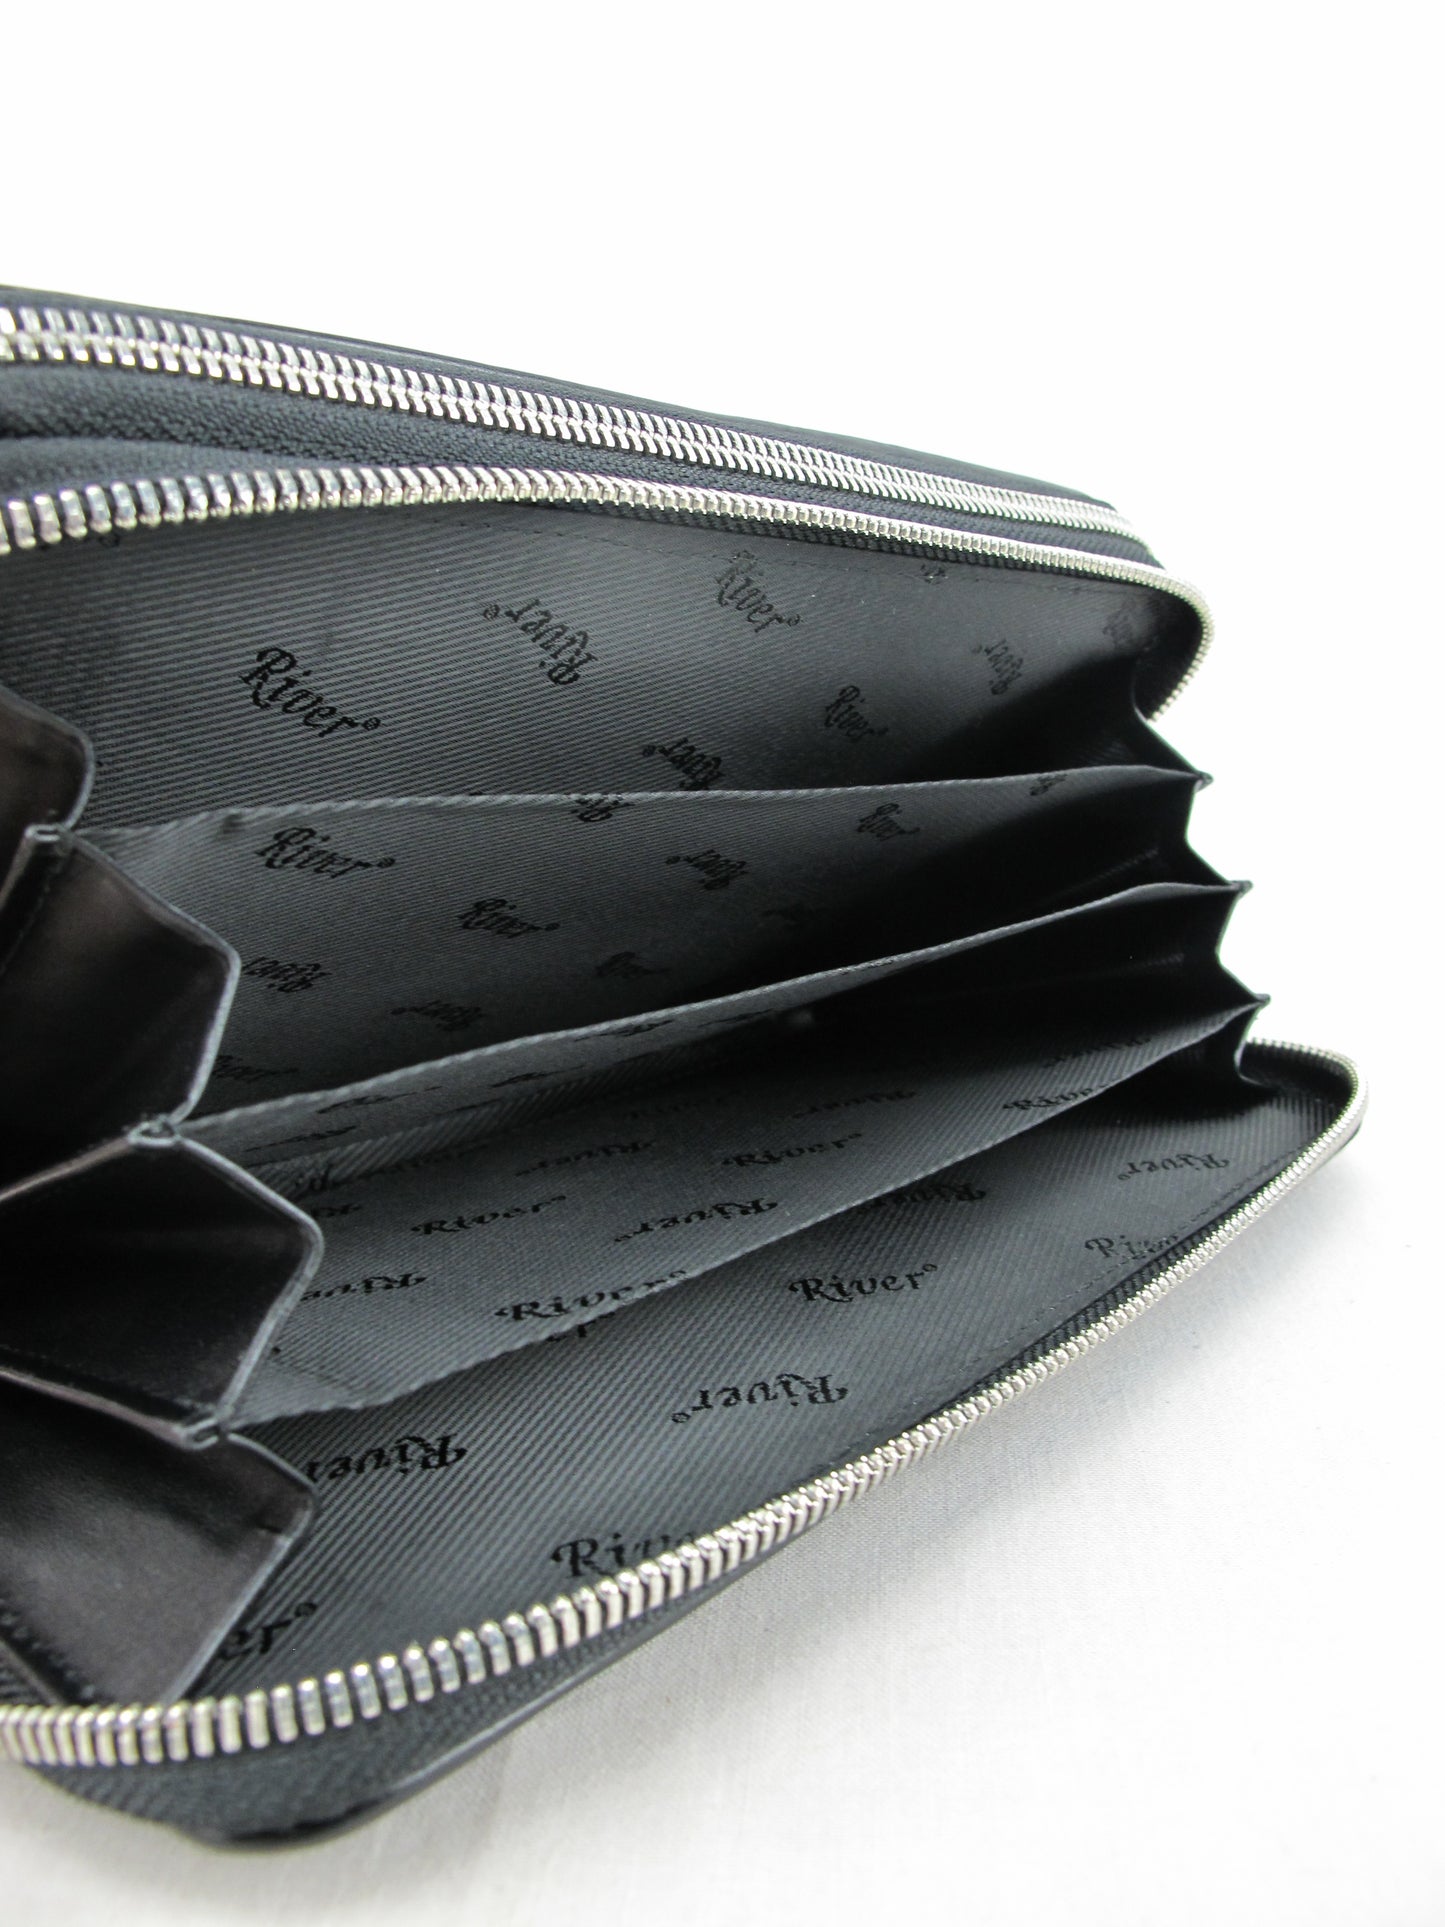 Genuine Polished Stingray Skin Leather Double Zip Around Wristlet Clutch Wallet Purse